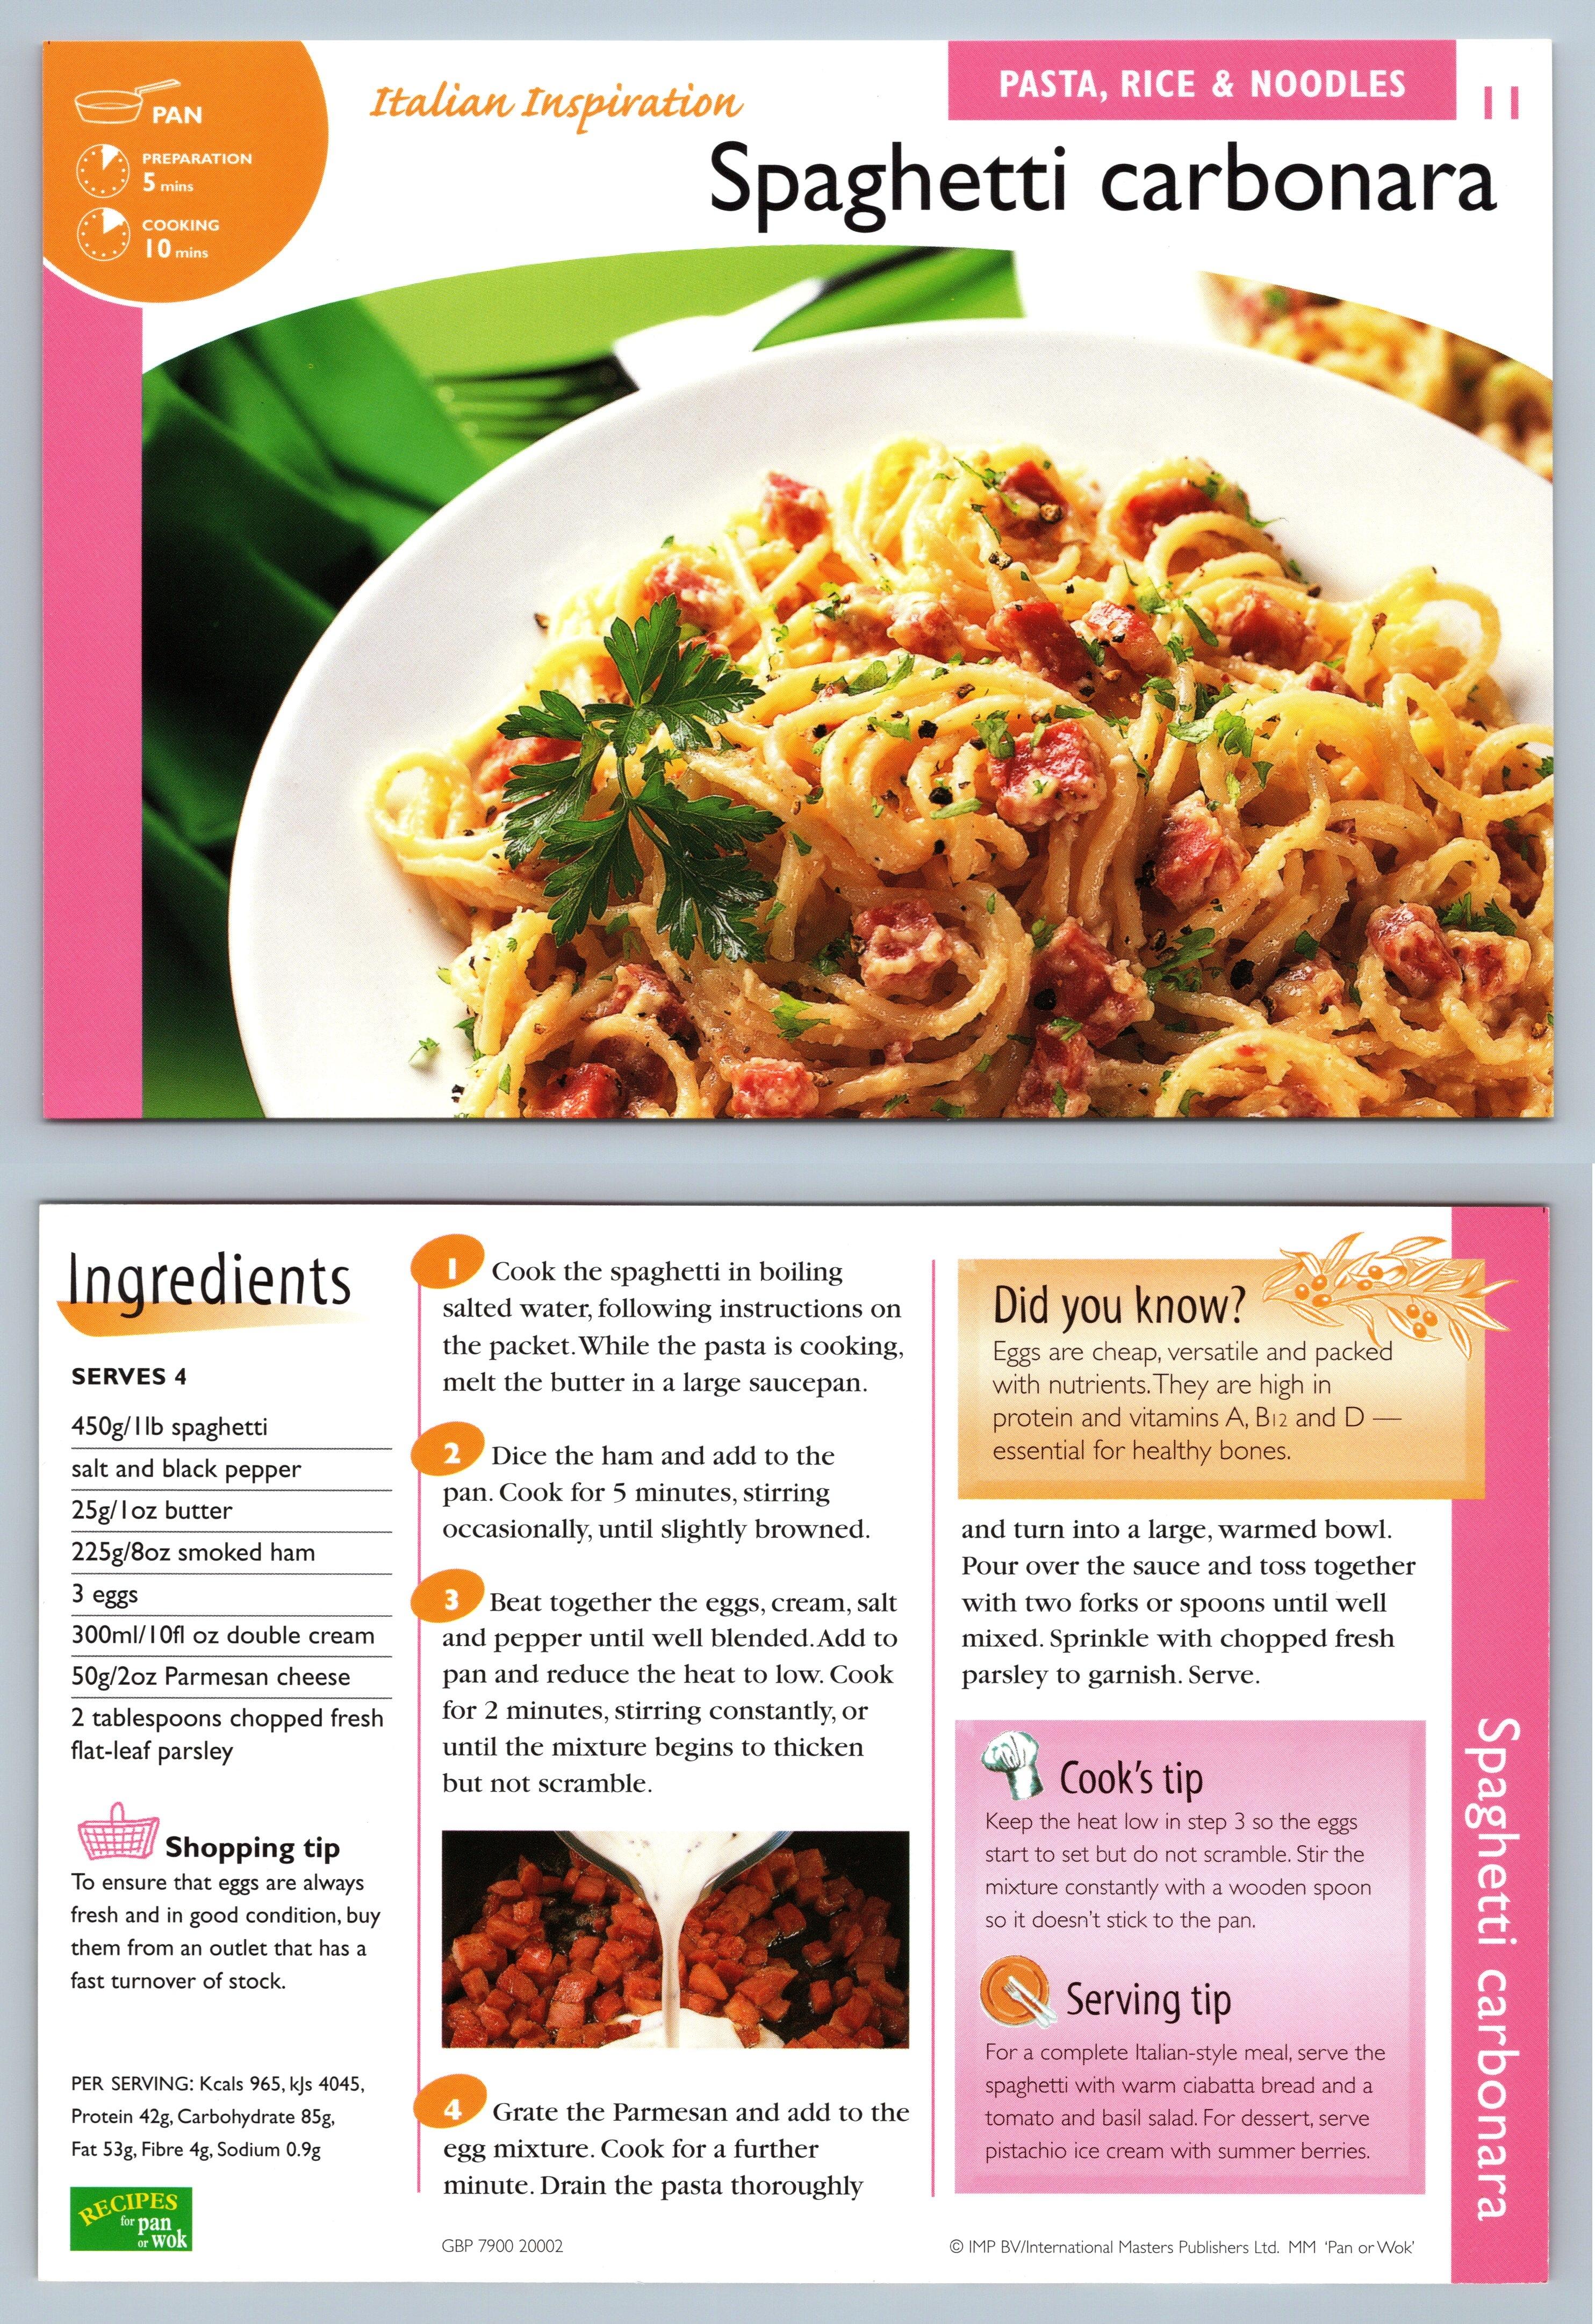 Spaghetti Carbonara #11 Pasta - Recipes For Pan Or Wok Imp Ltd Recipe Card